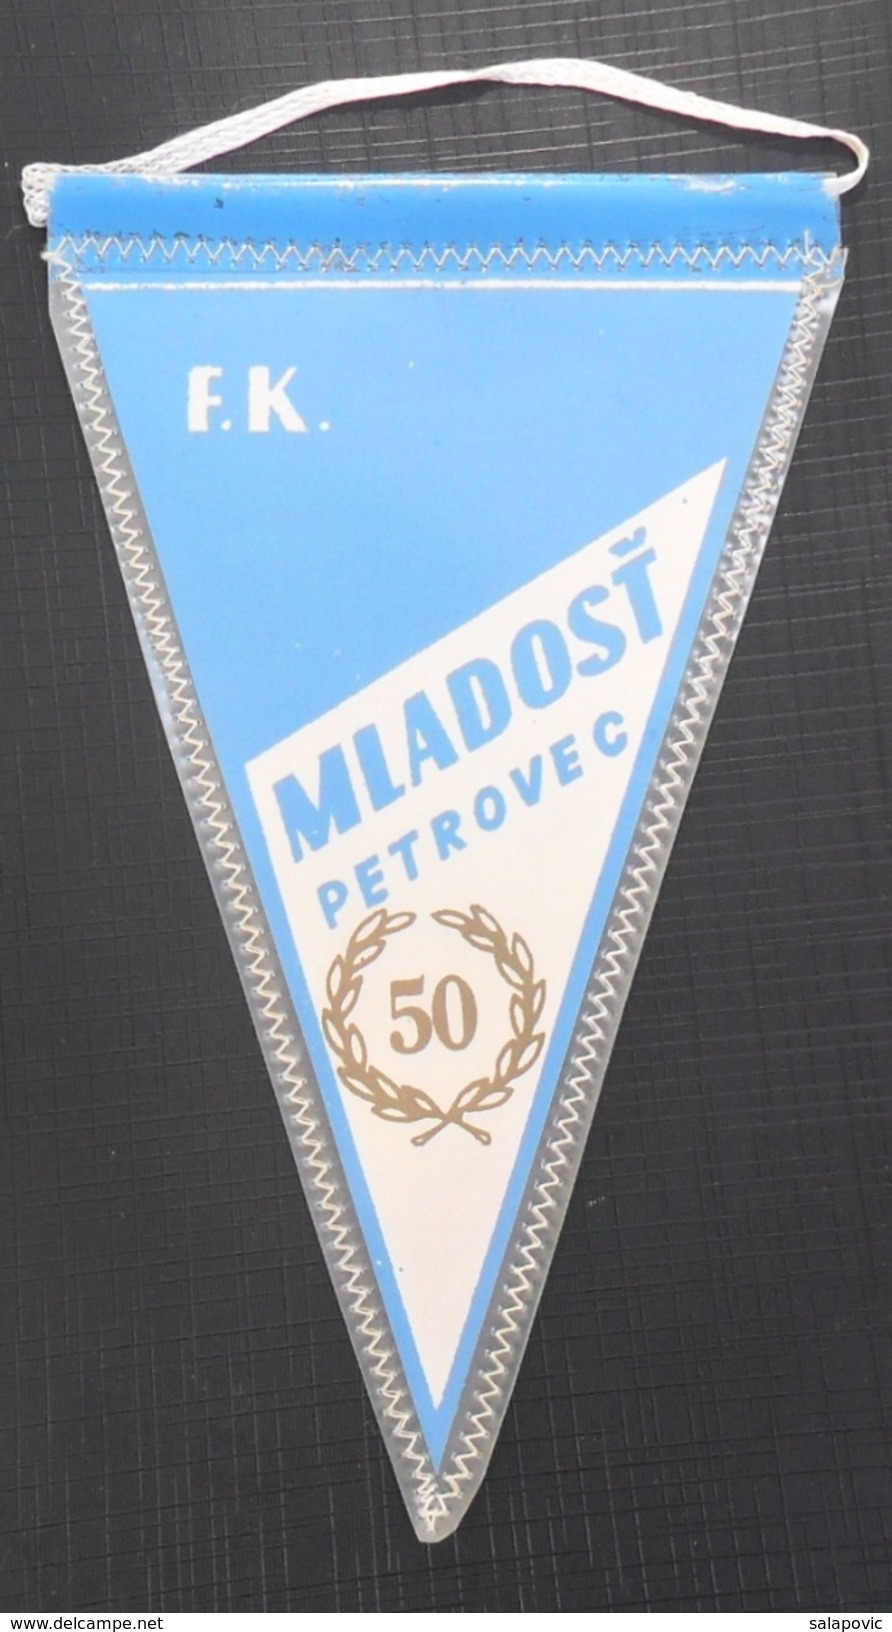 FK Mladost Petrovec, SERBIA FOOTBALL CLUB, CALCIO OLD PENNANT, SPORTS FLAG - Kleding, Souvenirs & Andere